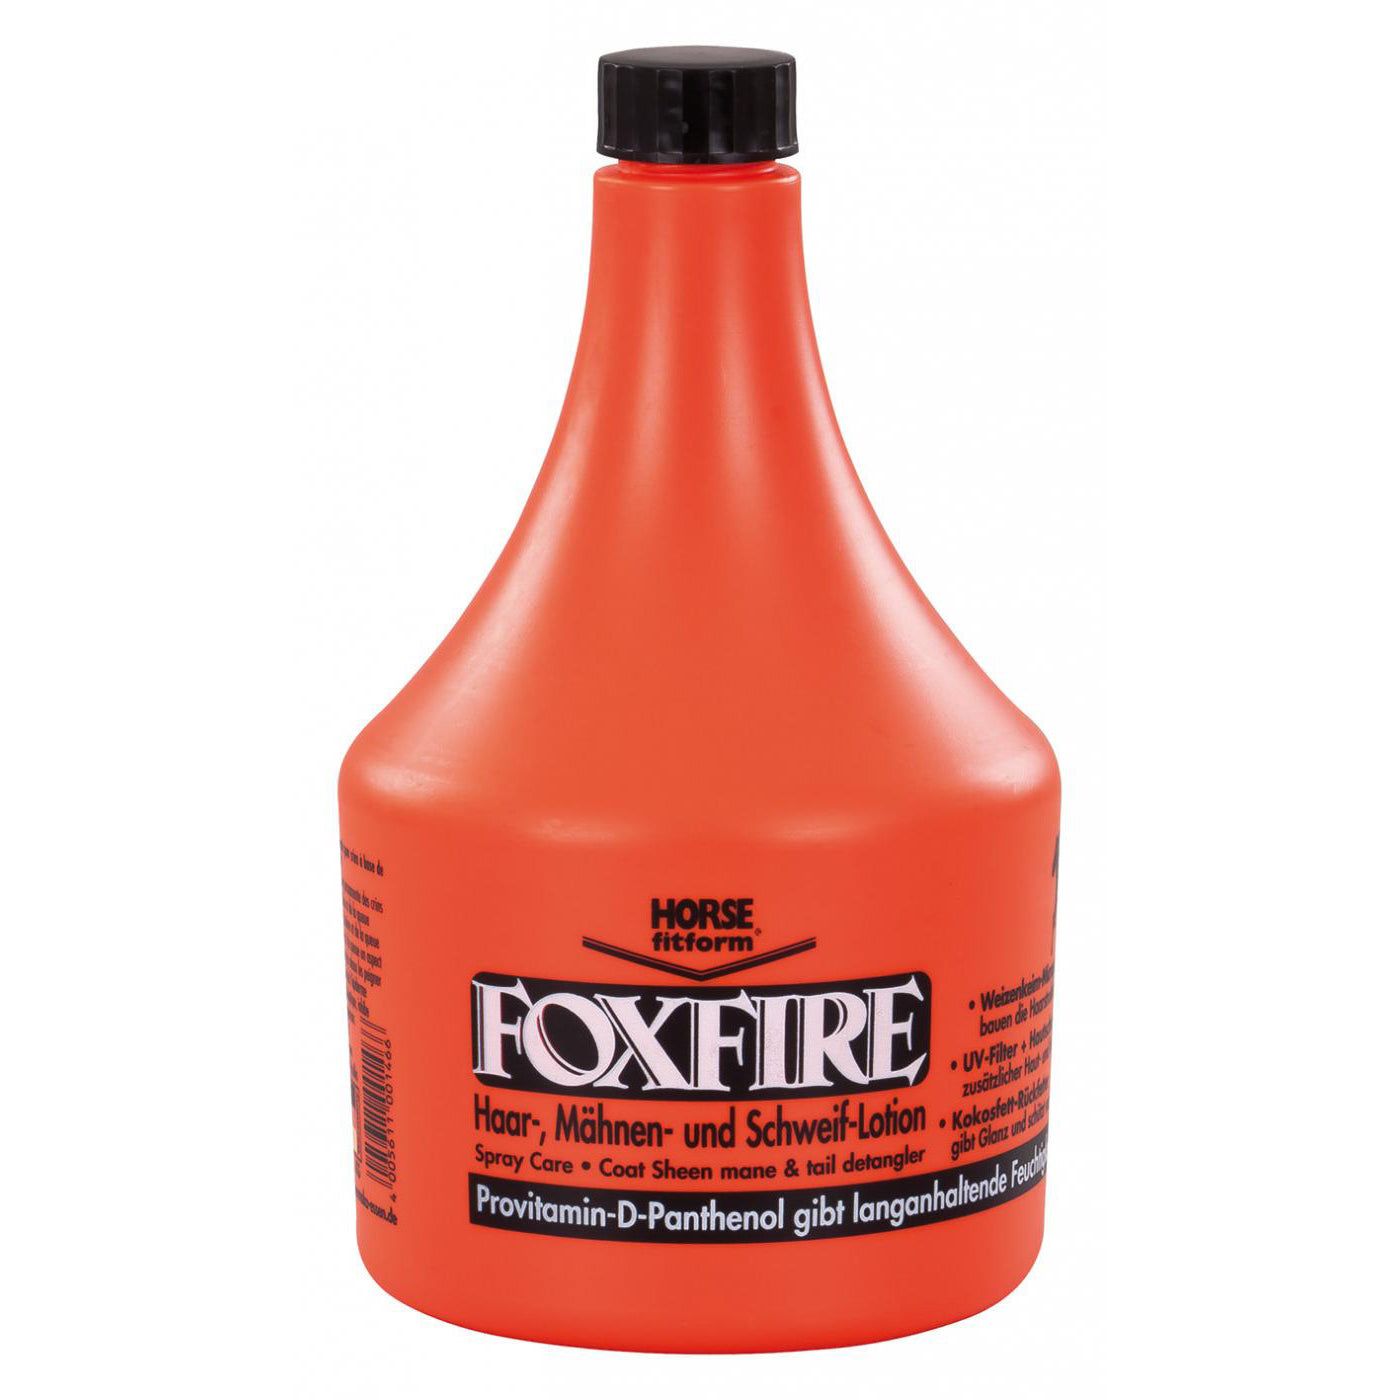 foxfire mane and tail detangler lotion